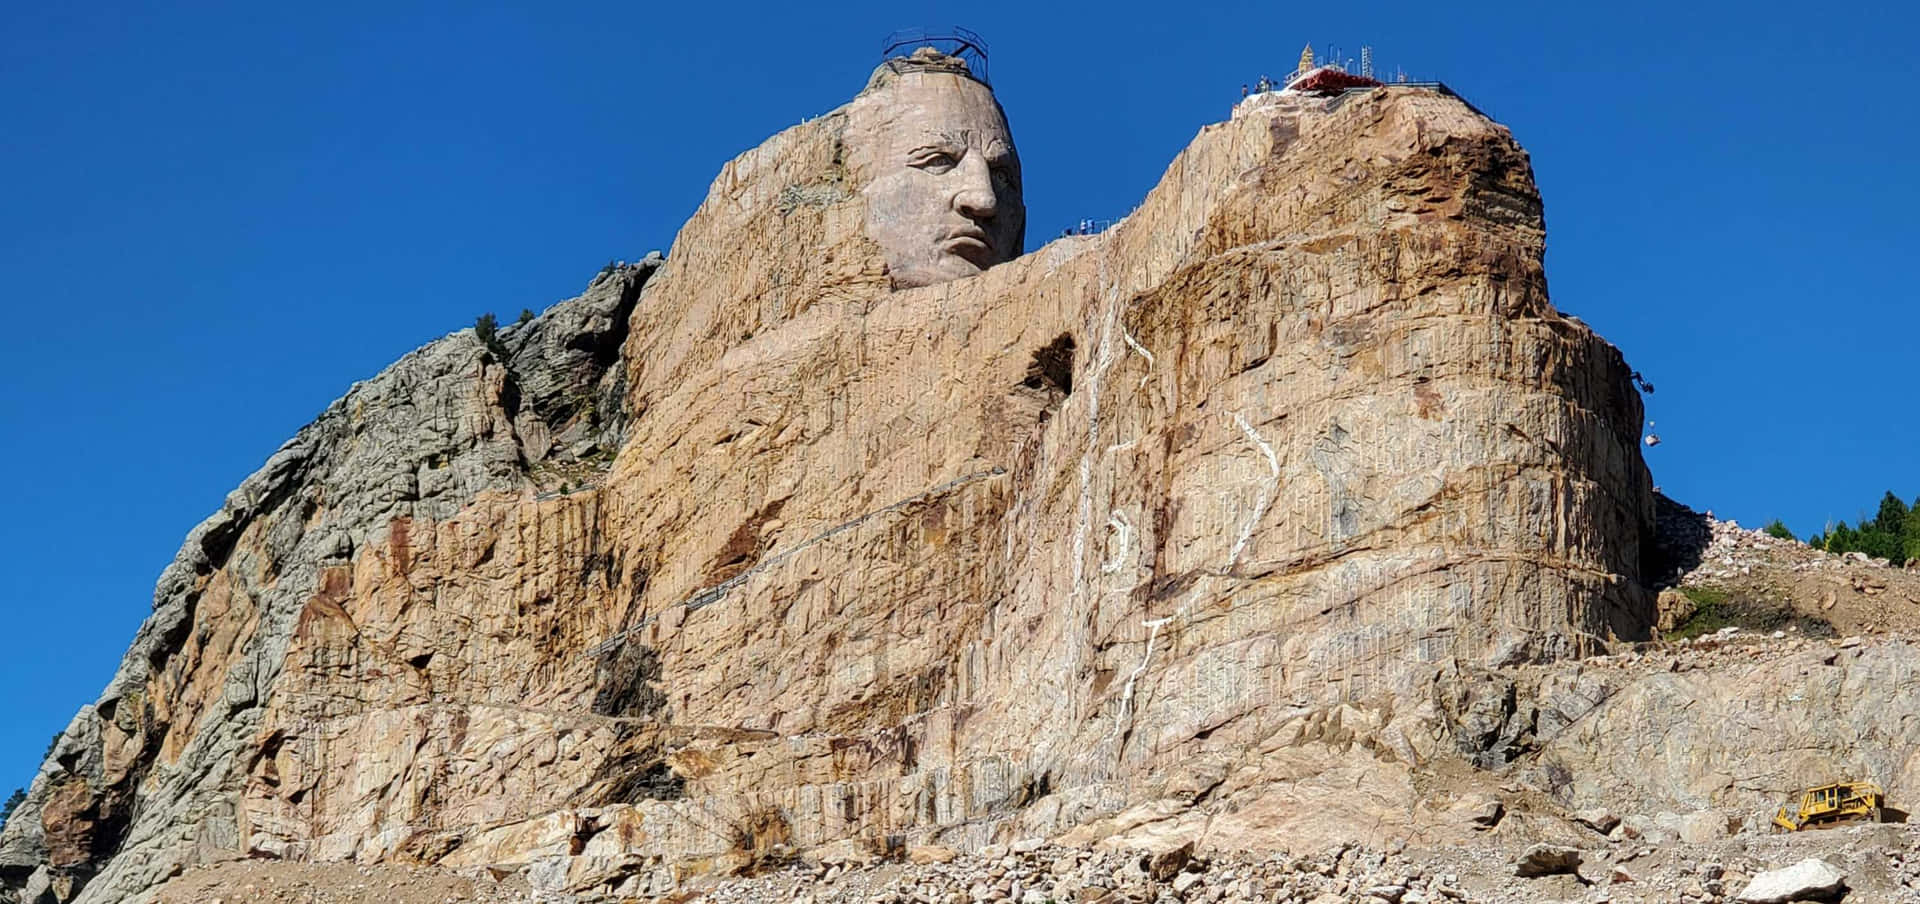 The Iconic Crazy Horse Memorial